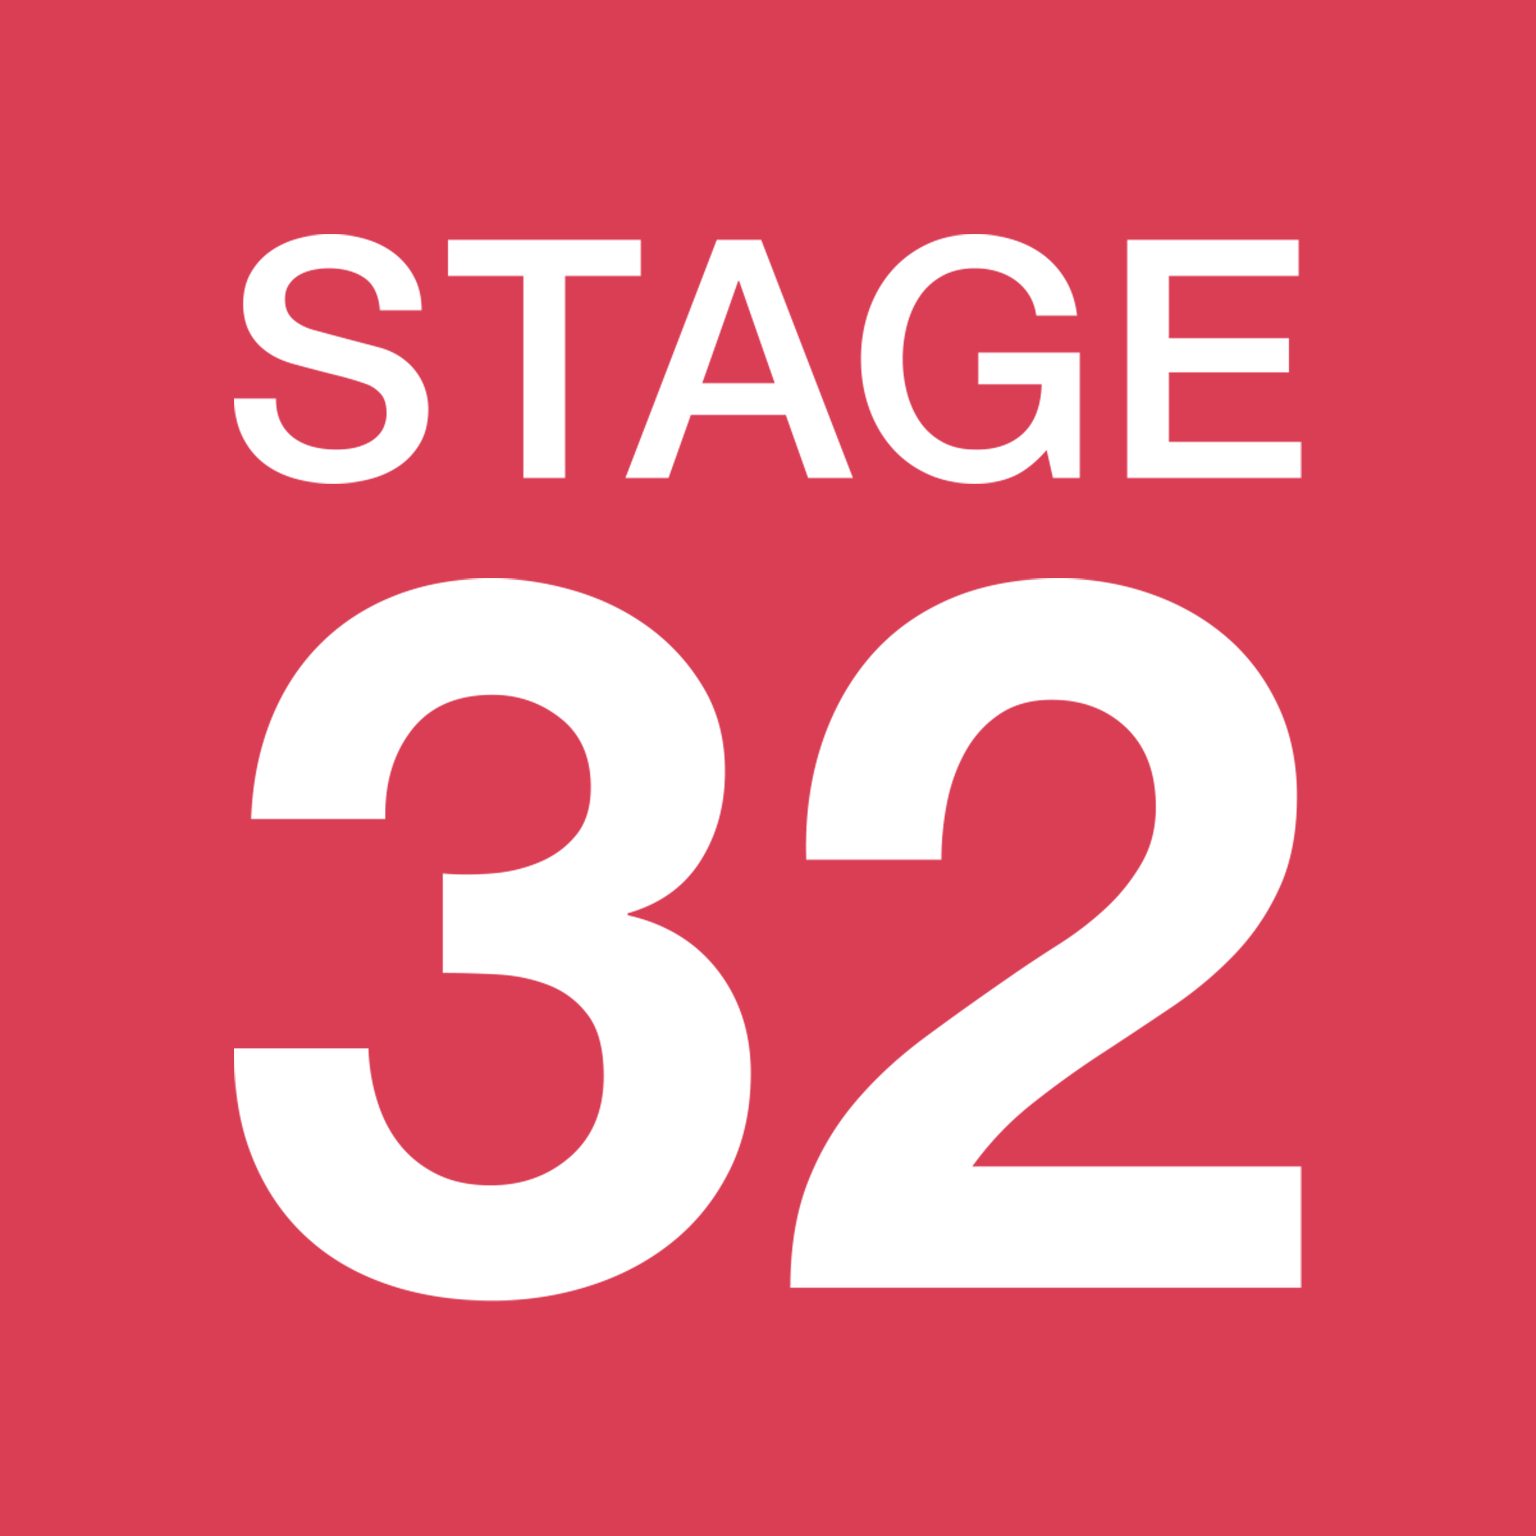 Stage 32 Proxy